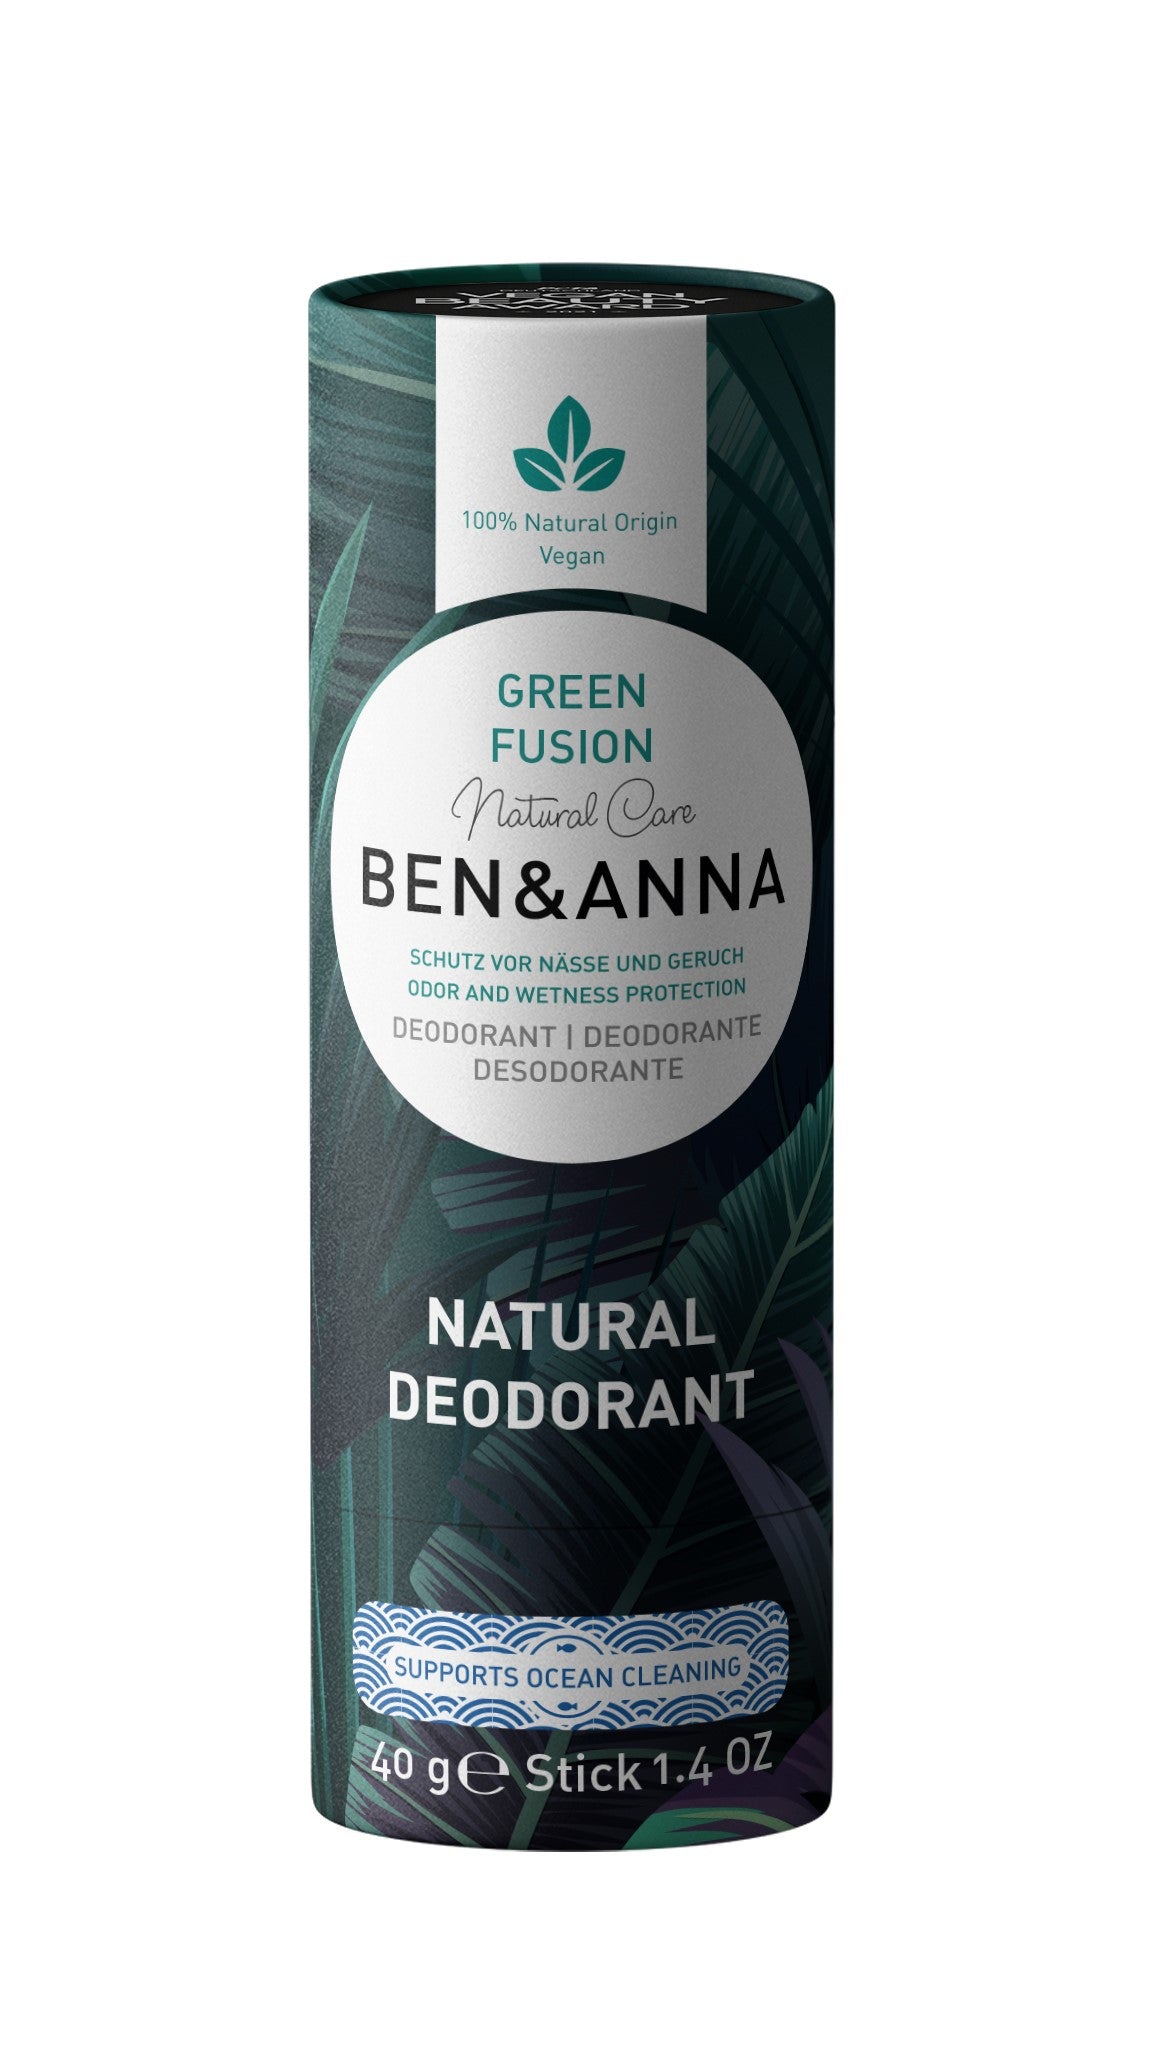 Ben & Anna Green Fusion Deodorantti 40 g - Pakkaus uudistuu